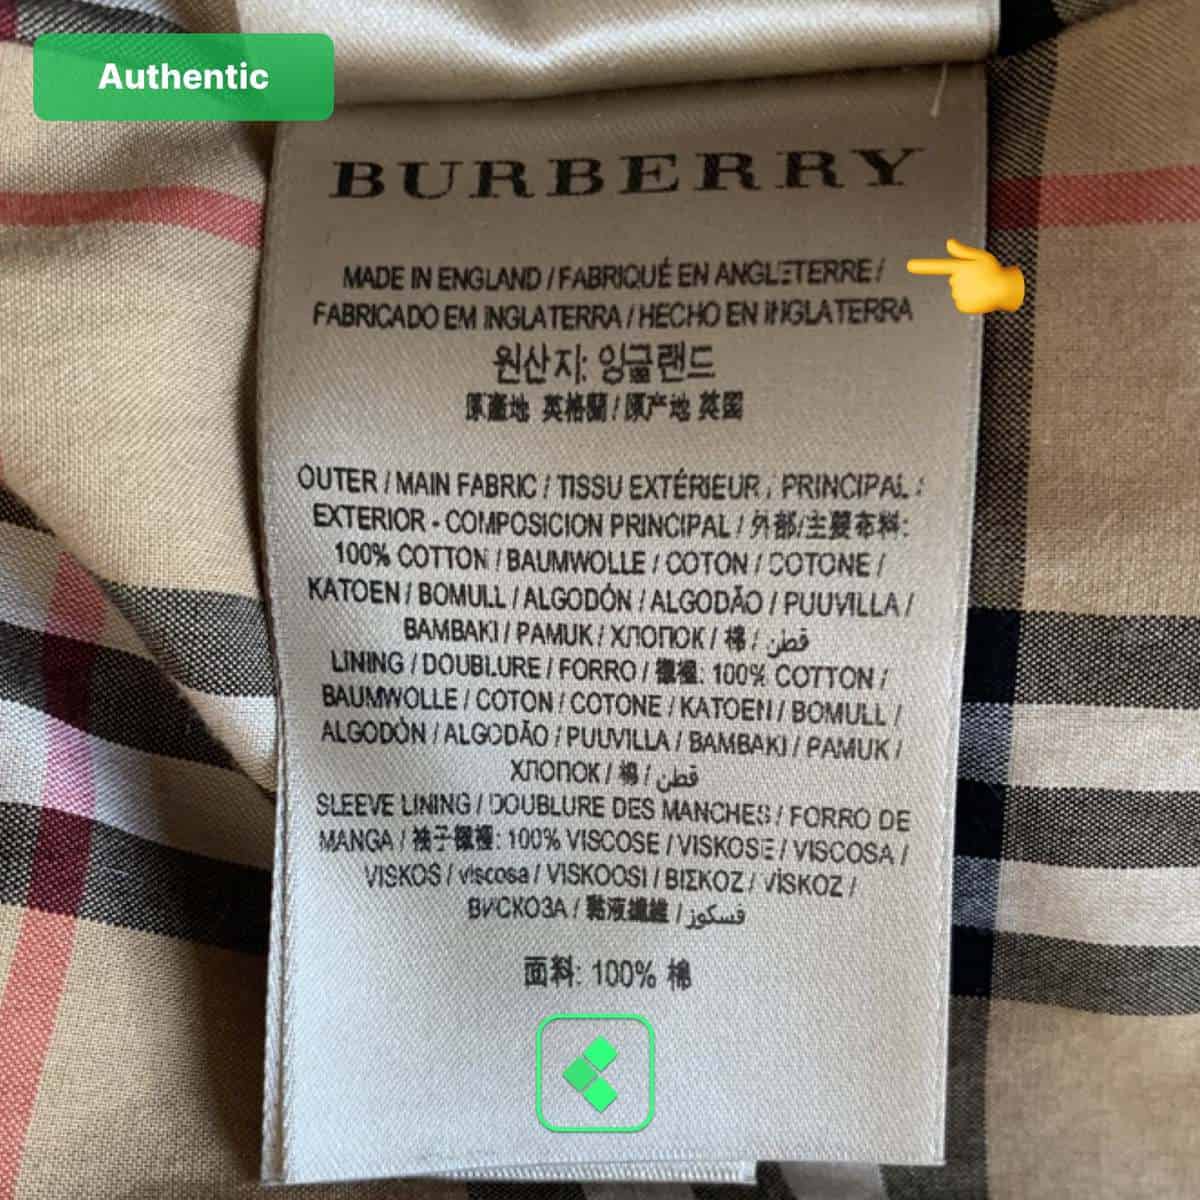 How to spot fake burberry coat - bangkokbpo